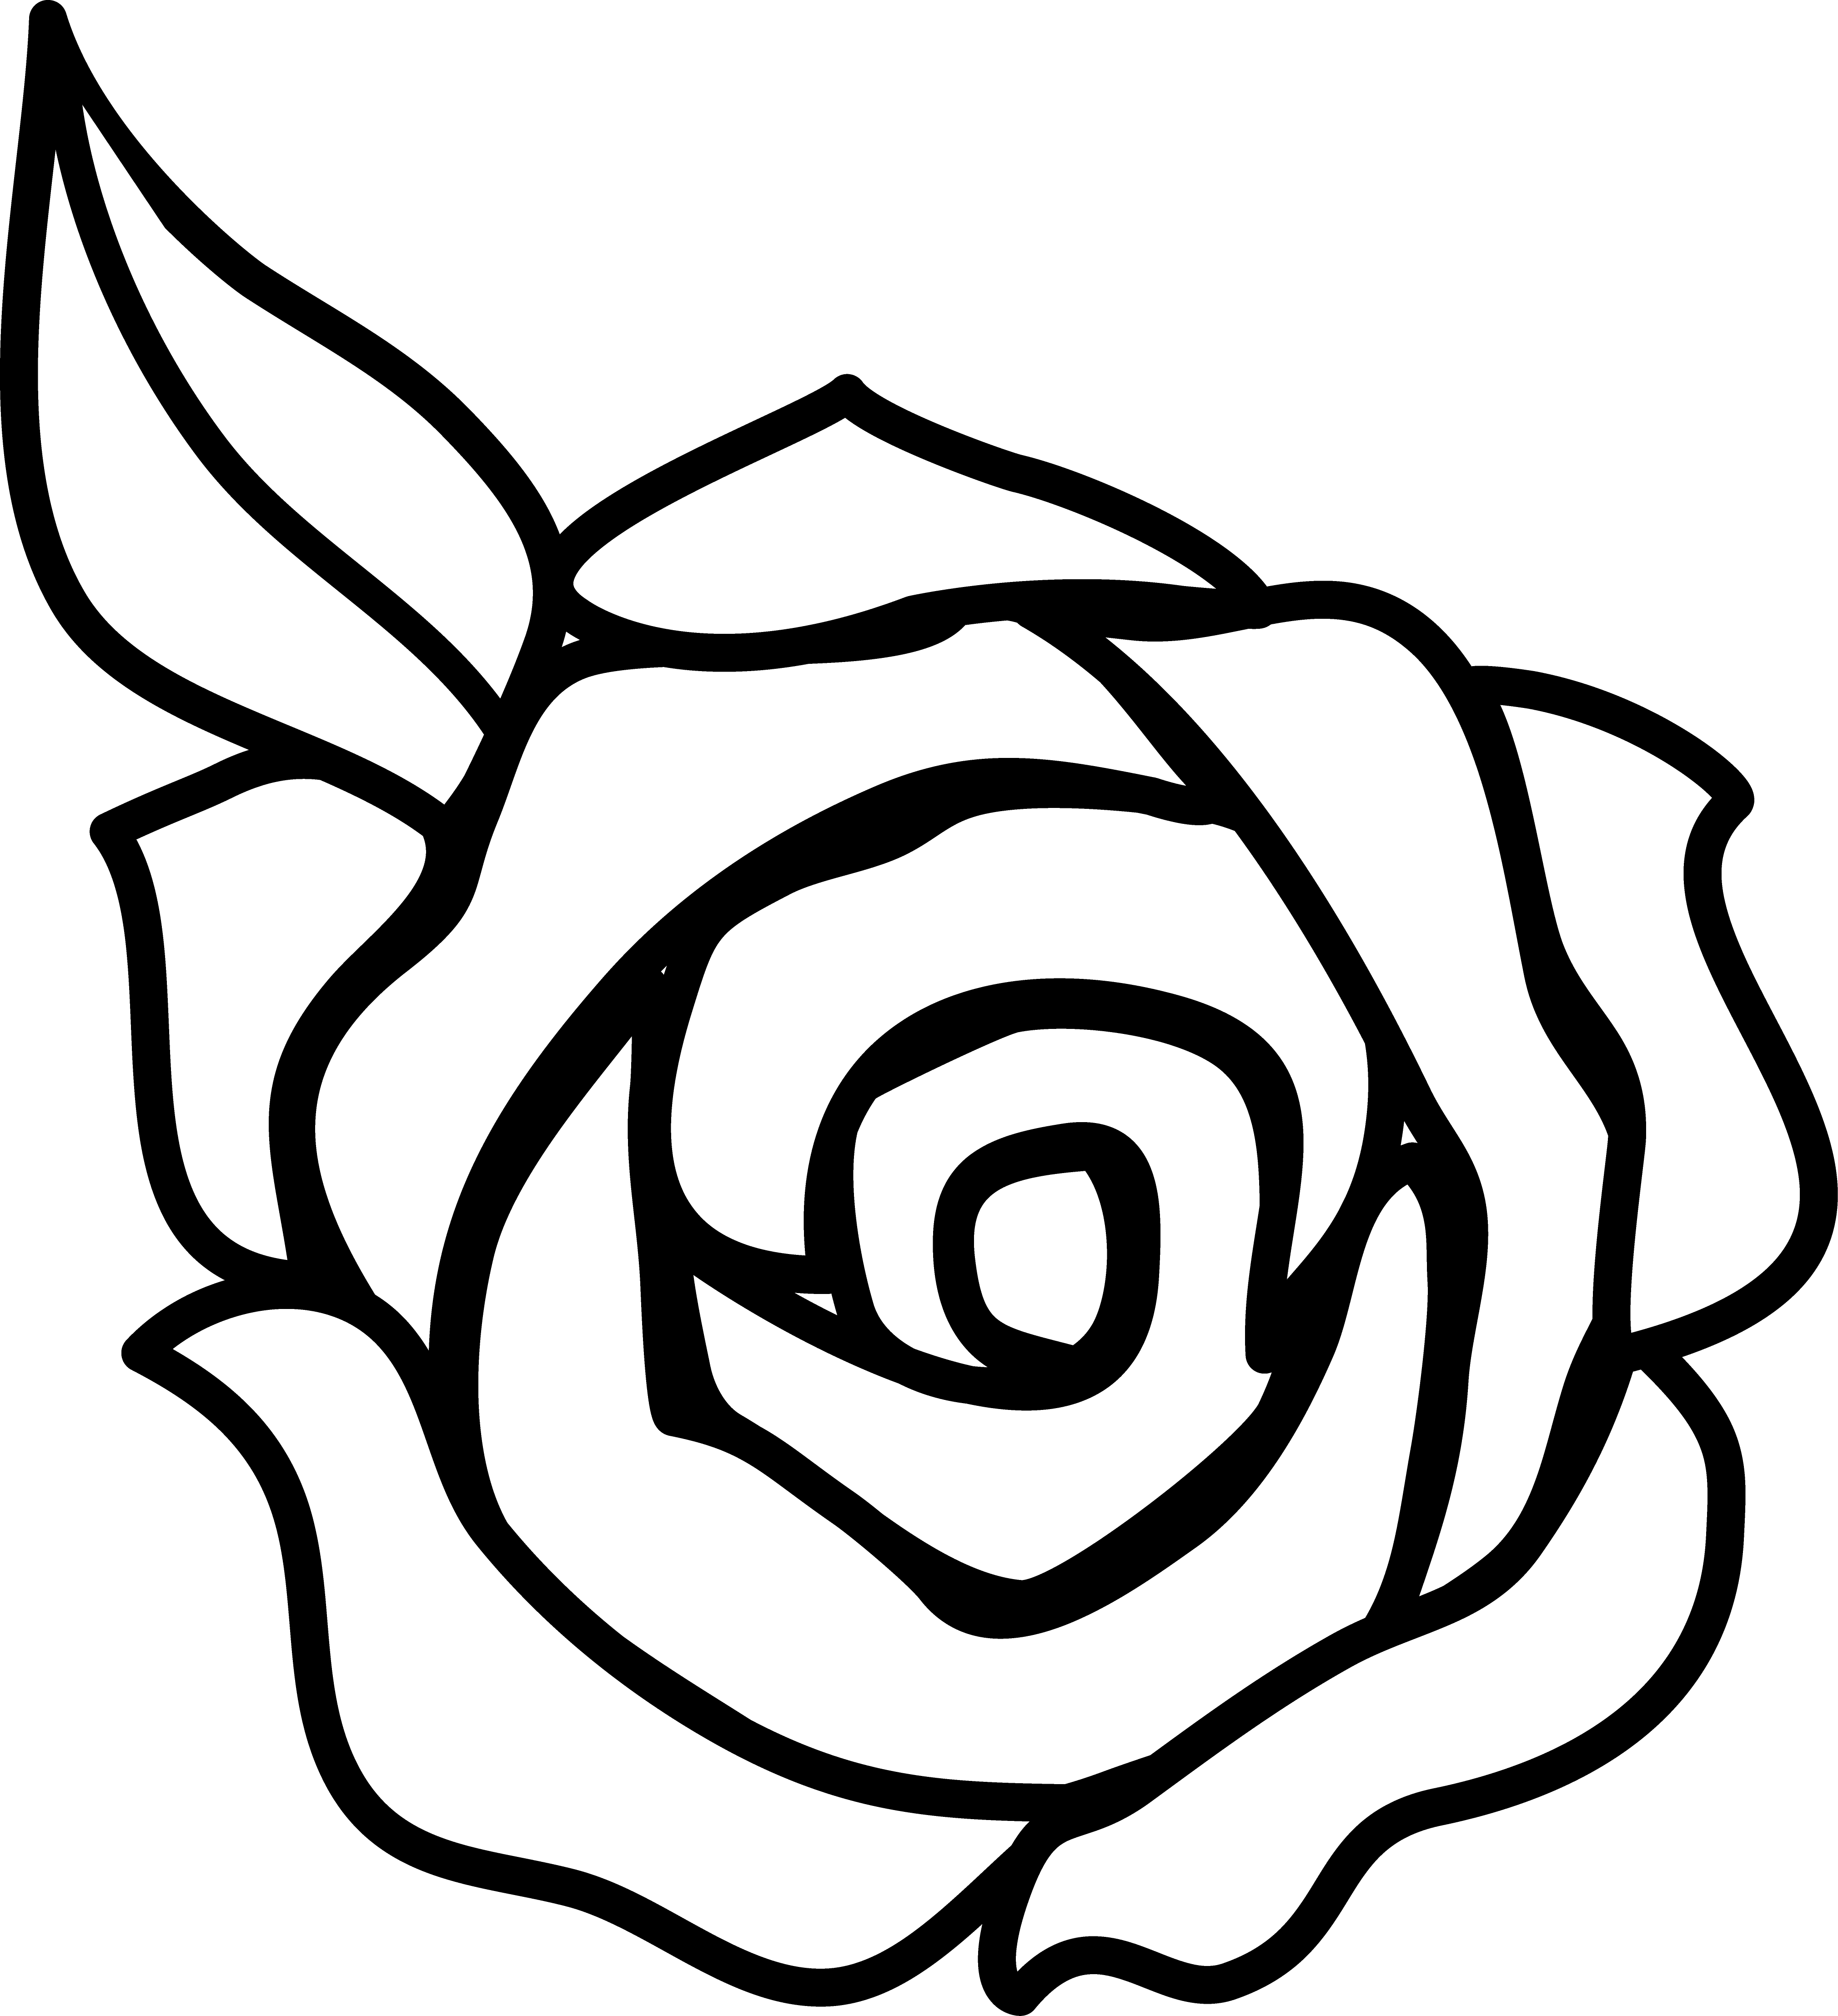 Free Rose Black N White Download Free Clip Art Free Clip